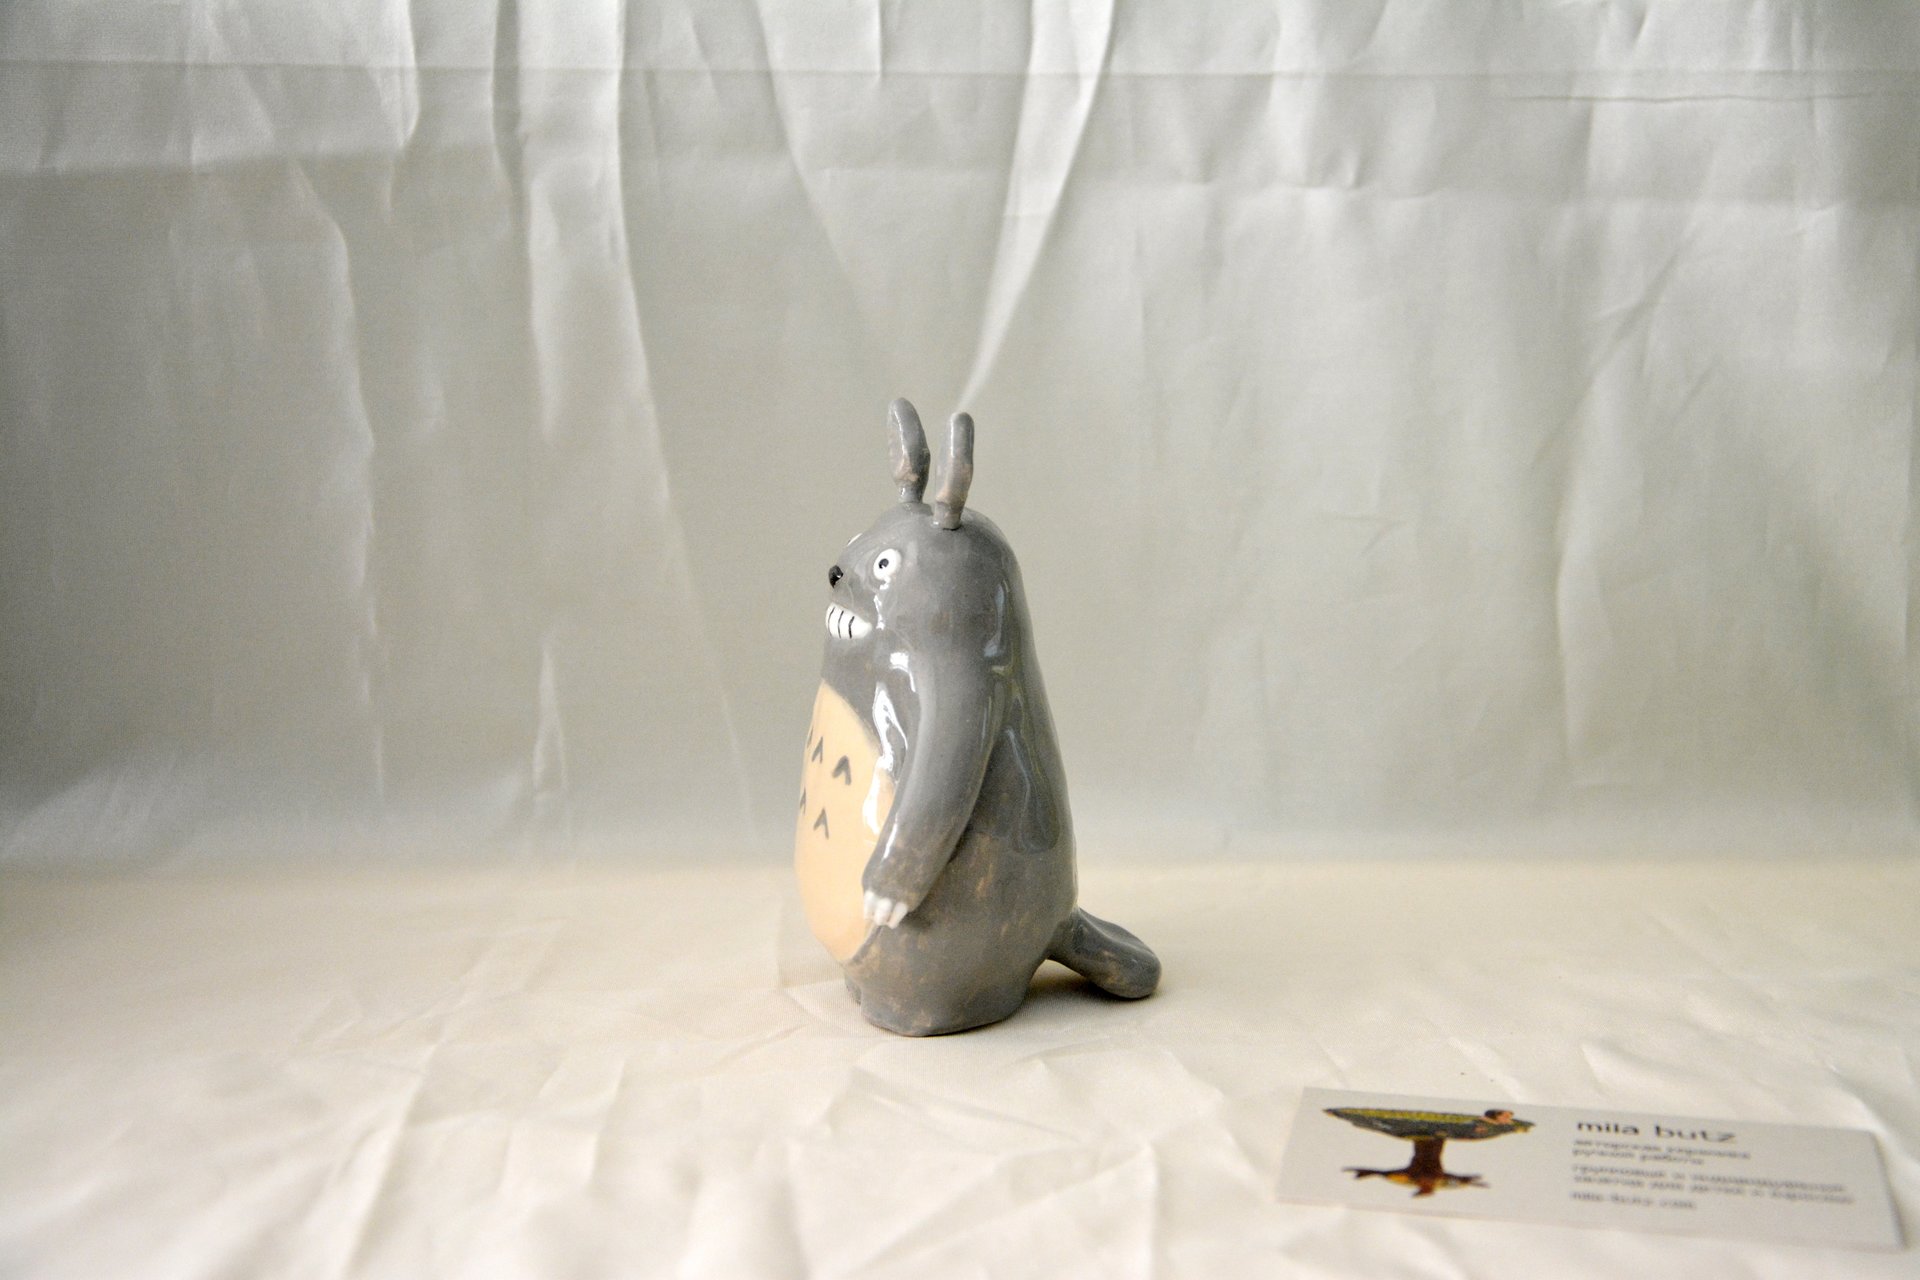 Ceramic figurine Totoro, height - 11 cm, photo 2 of 5.